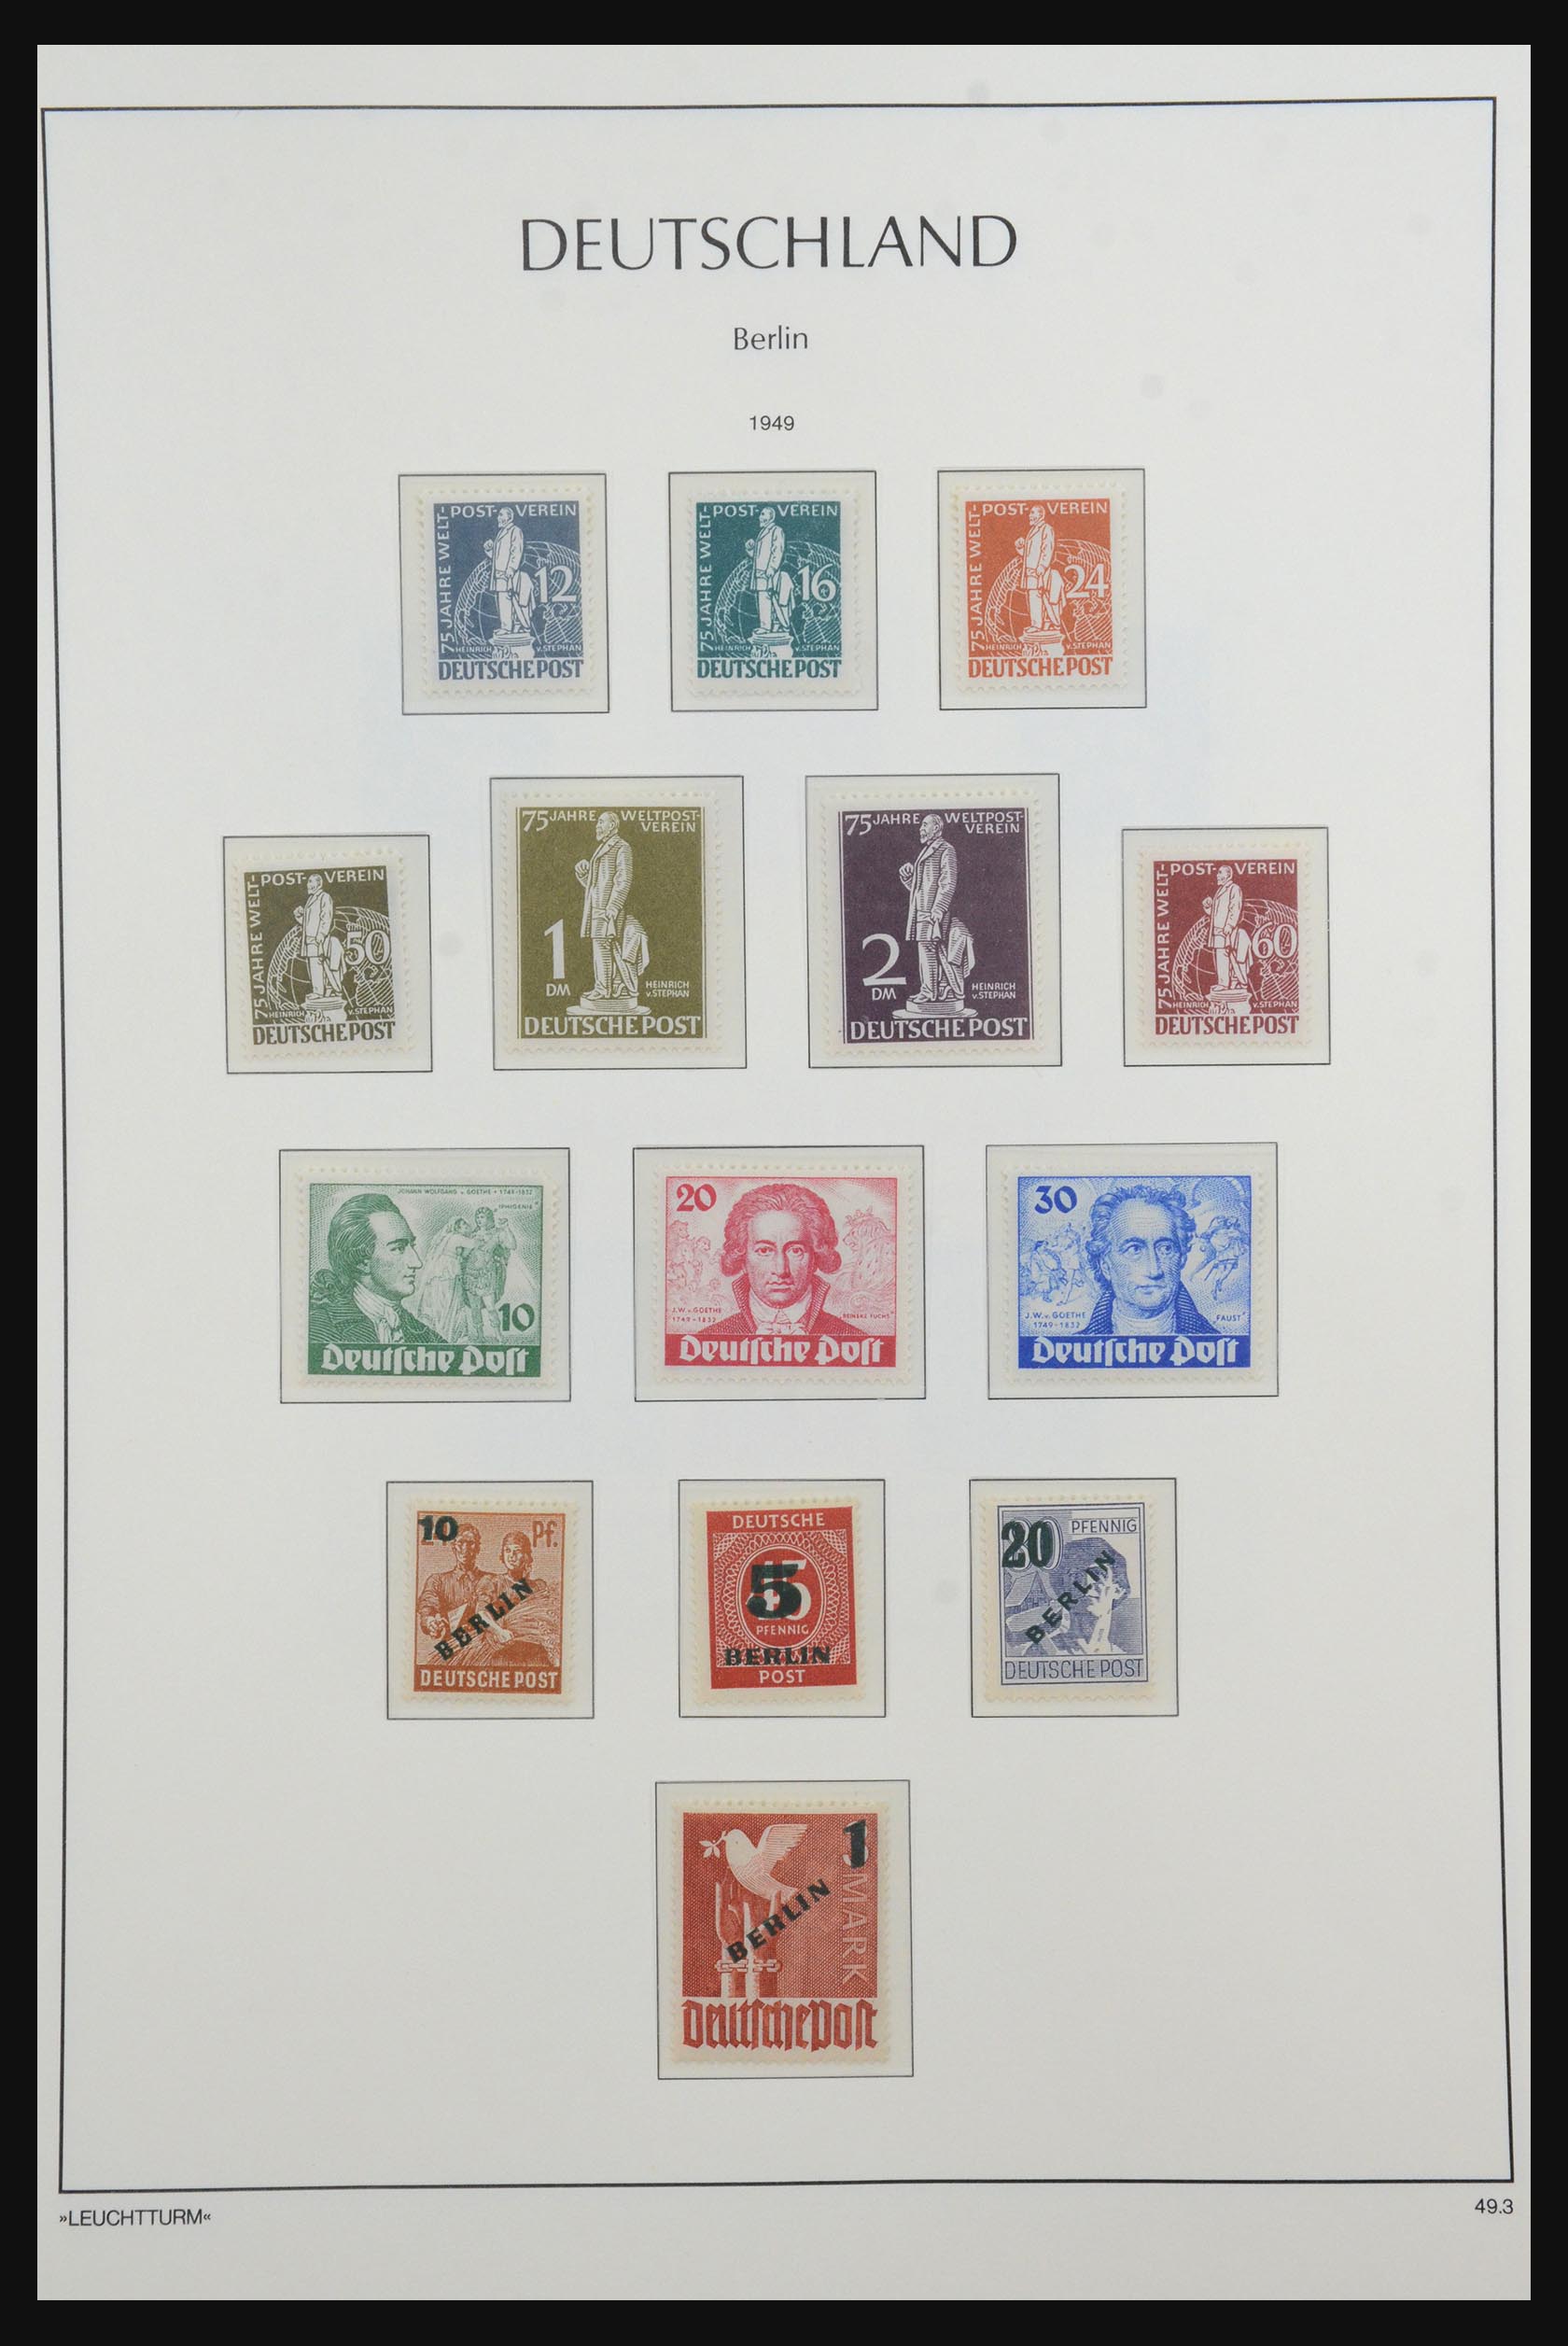 31601 004 - 31601 Bundespost, Berlin and Saar 1948-2008.